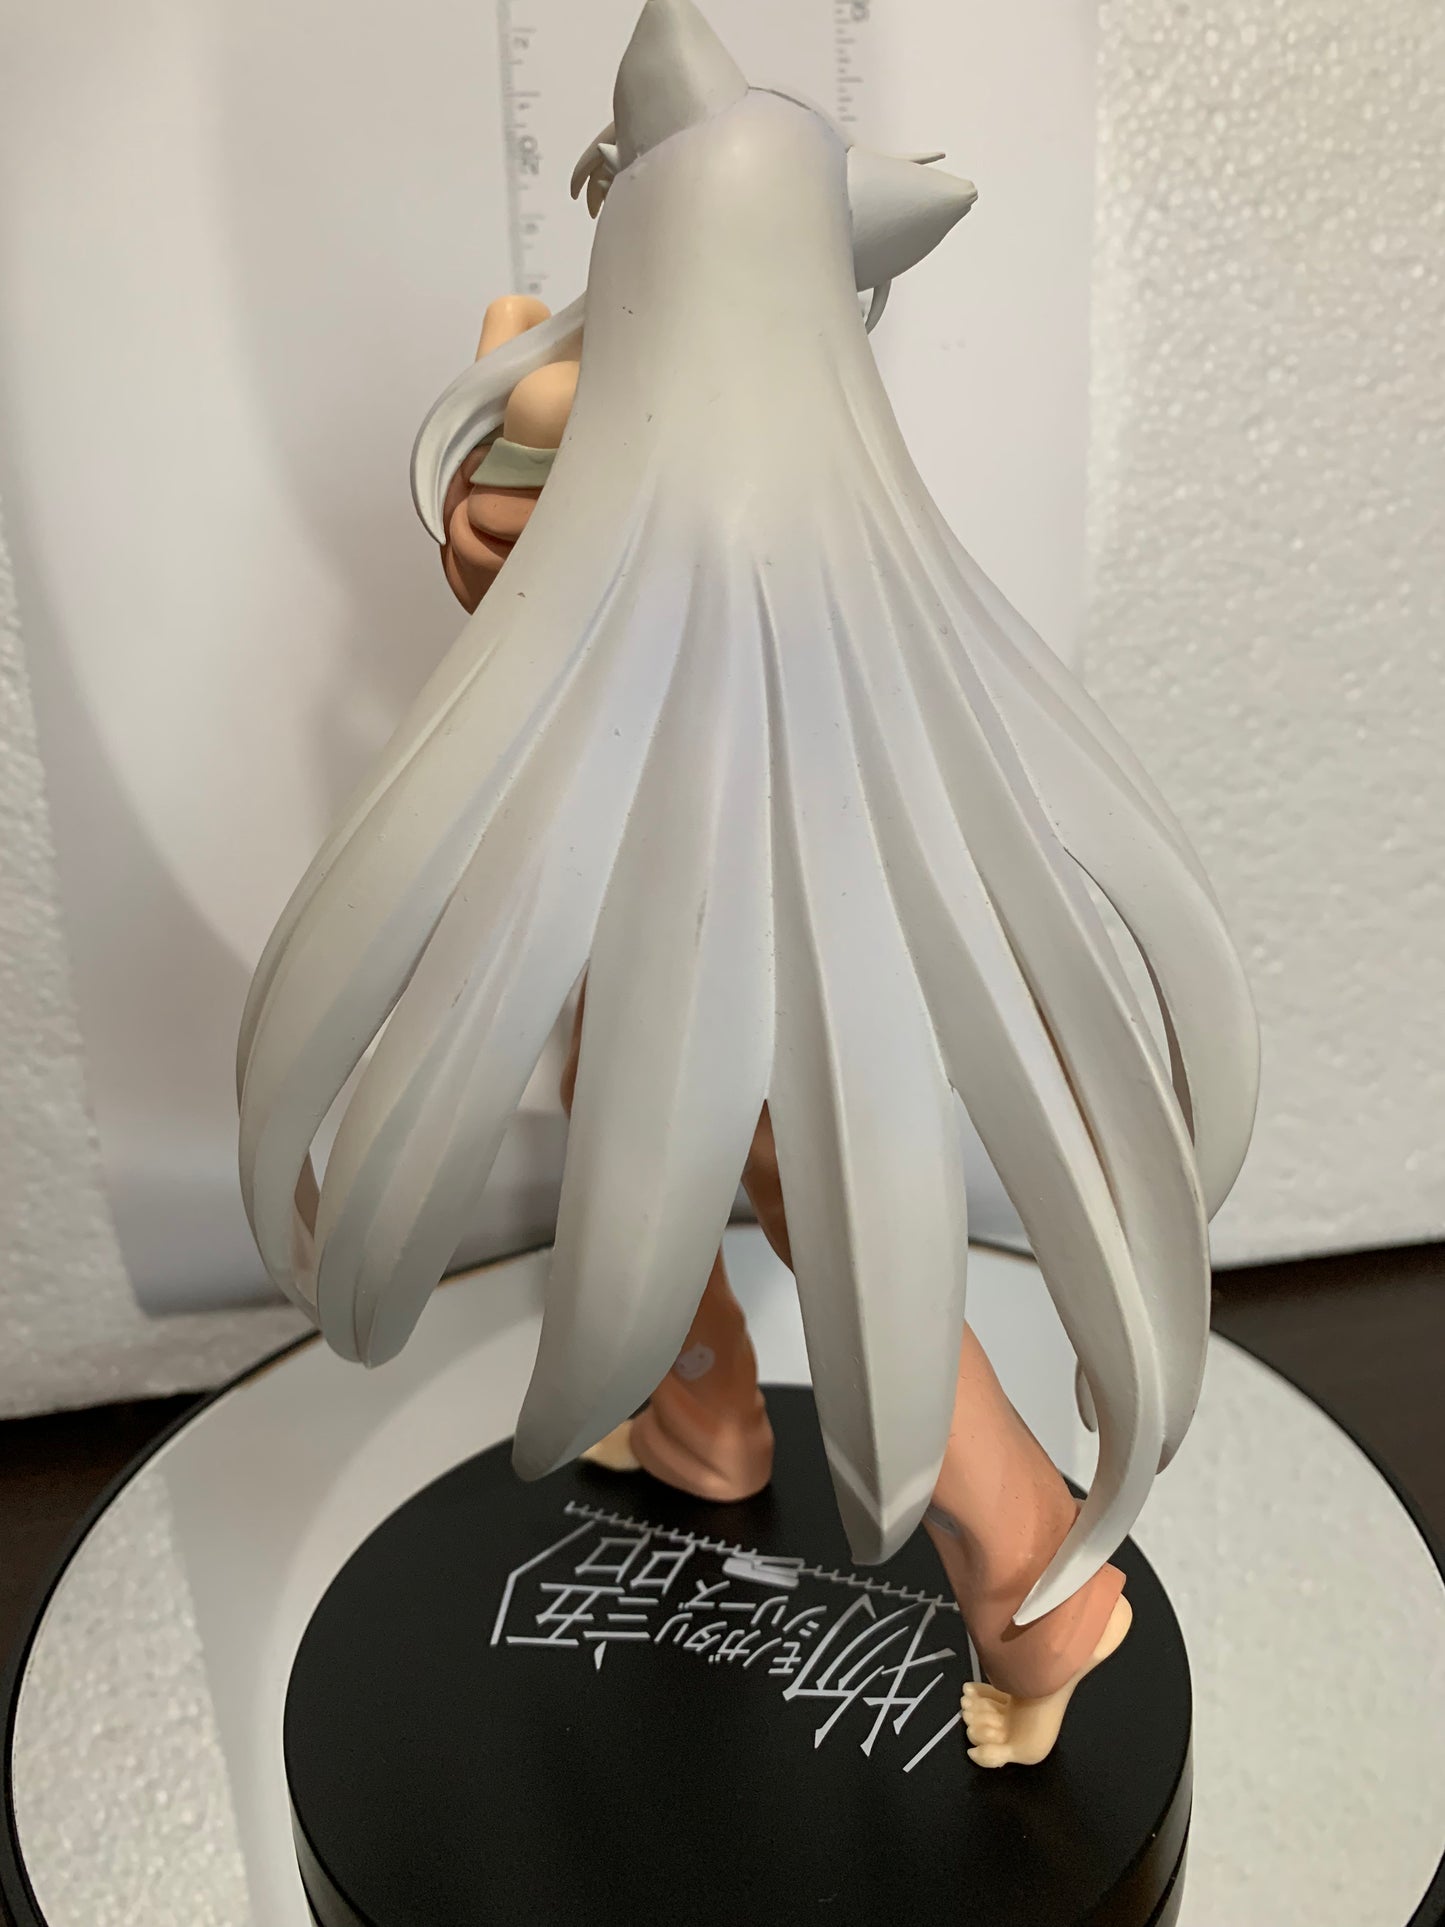 Monogatari Series Neko Figure Premium Black Hanekawa 18 cm Sega Prize #078